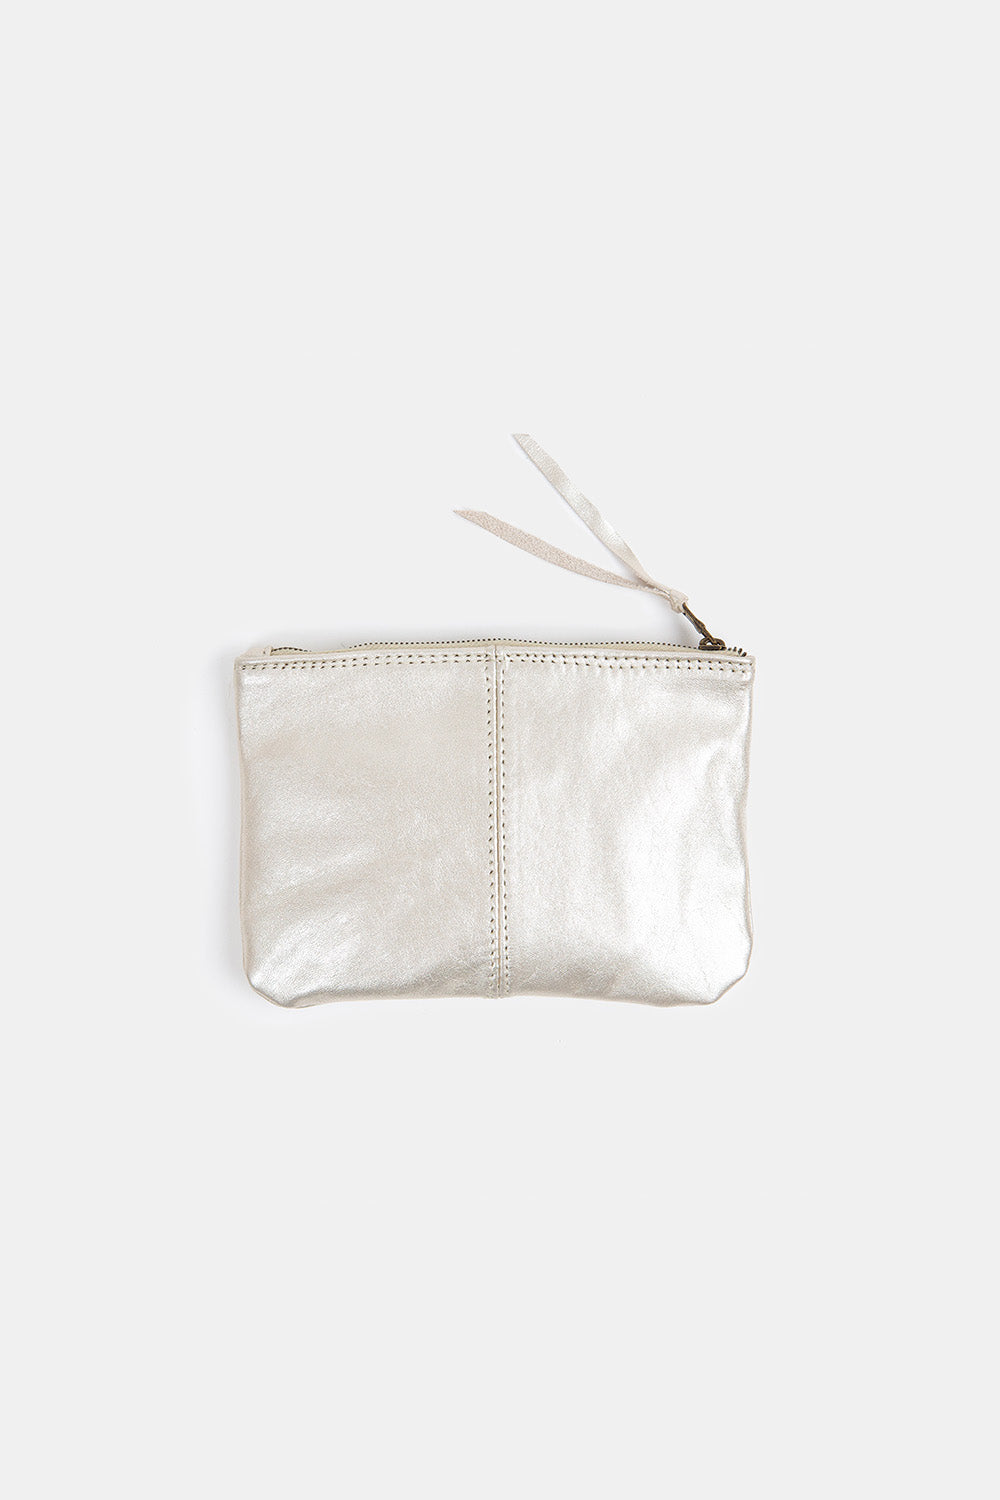 Elodie Leather Makeup Bag in Platinum